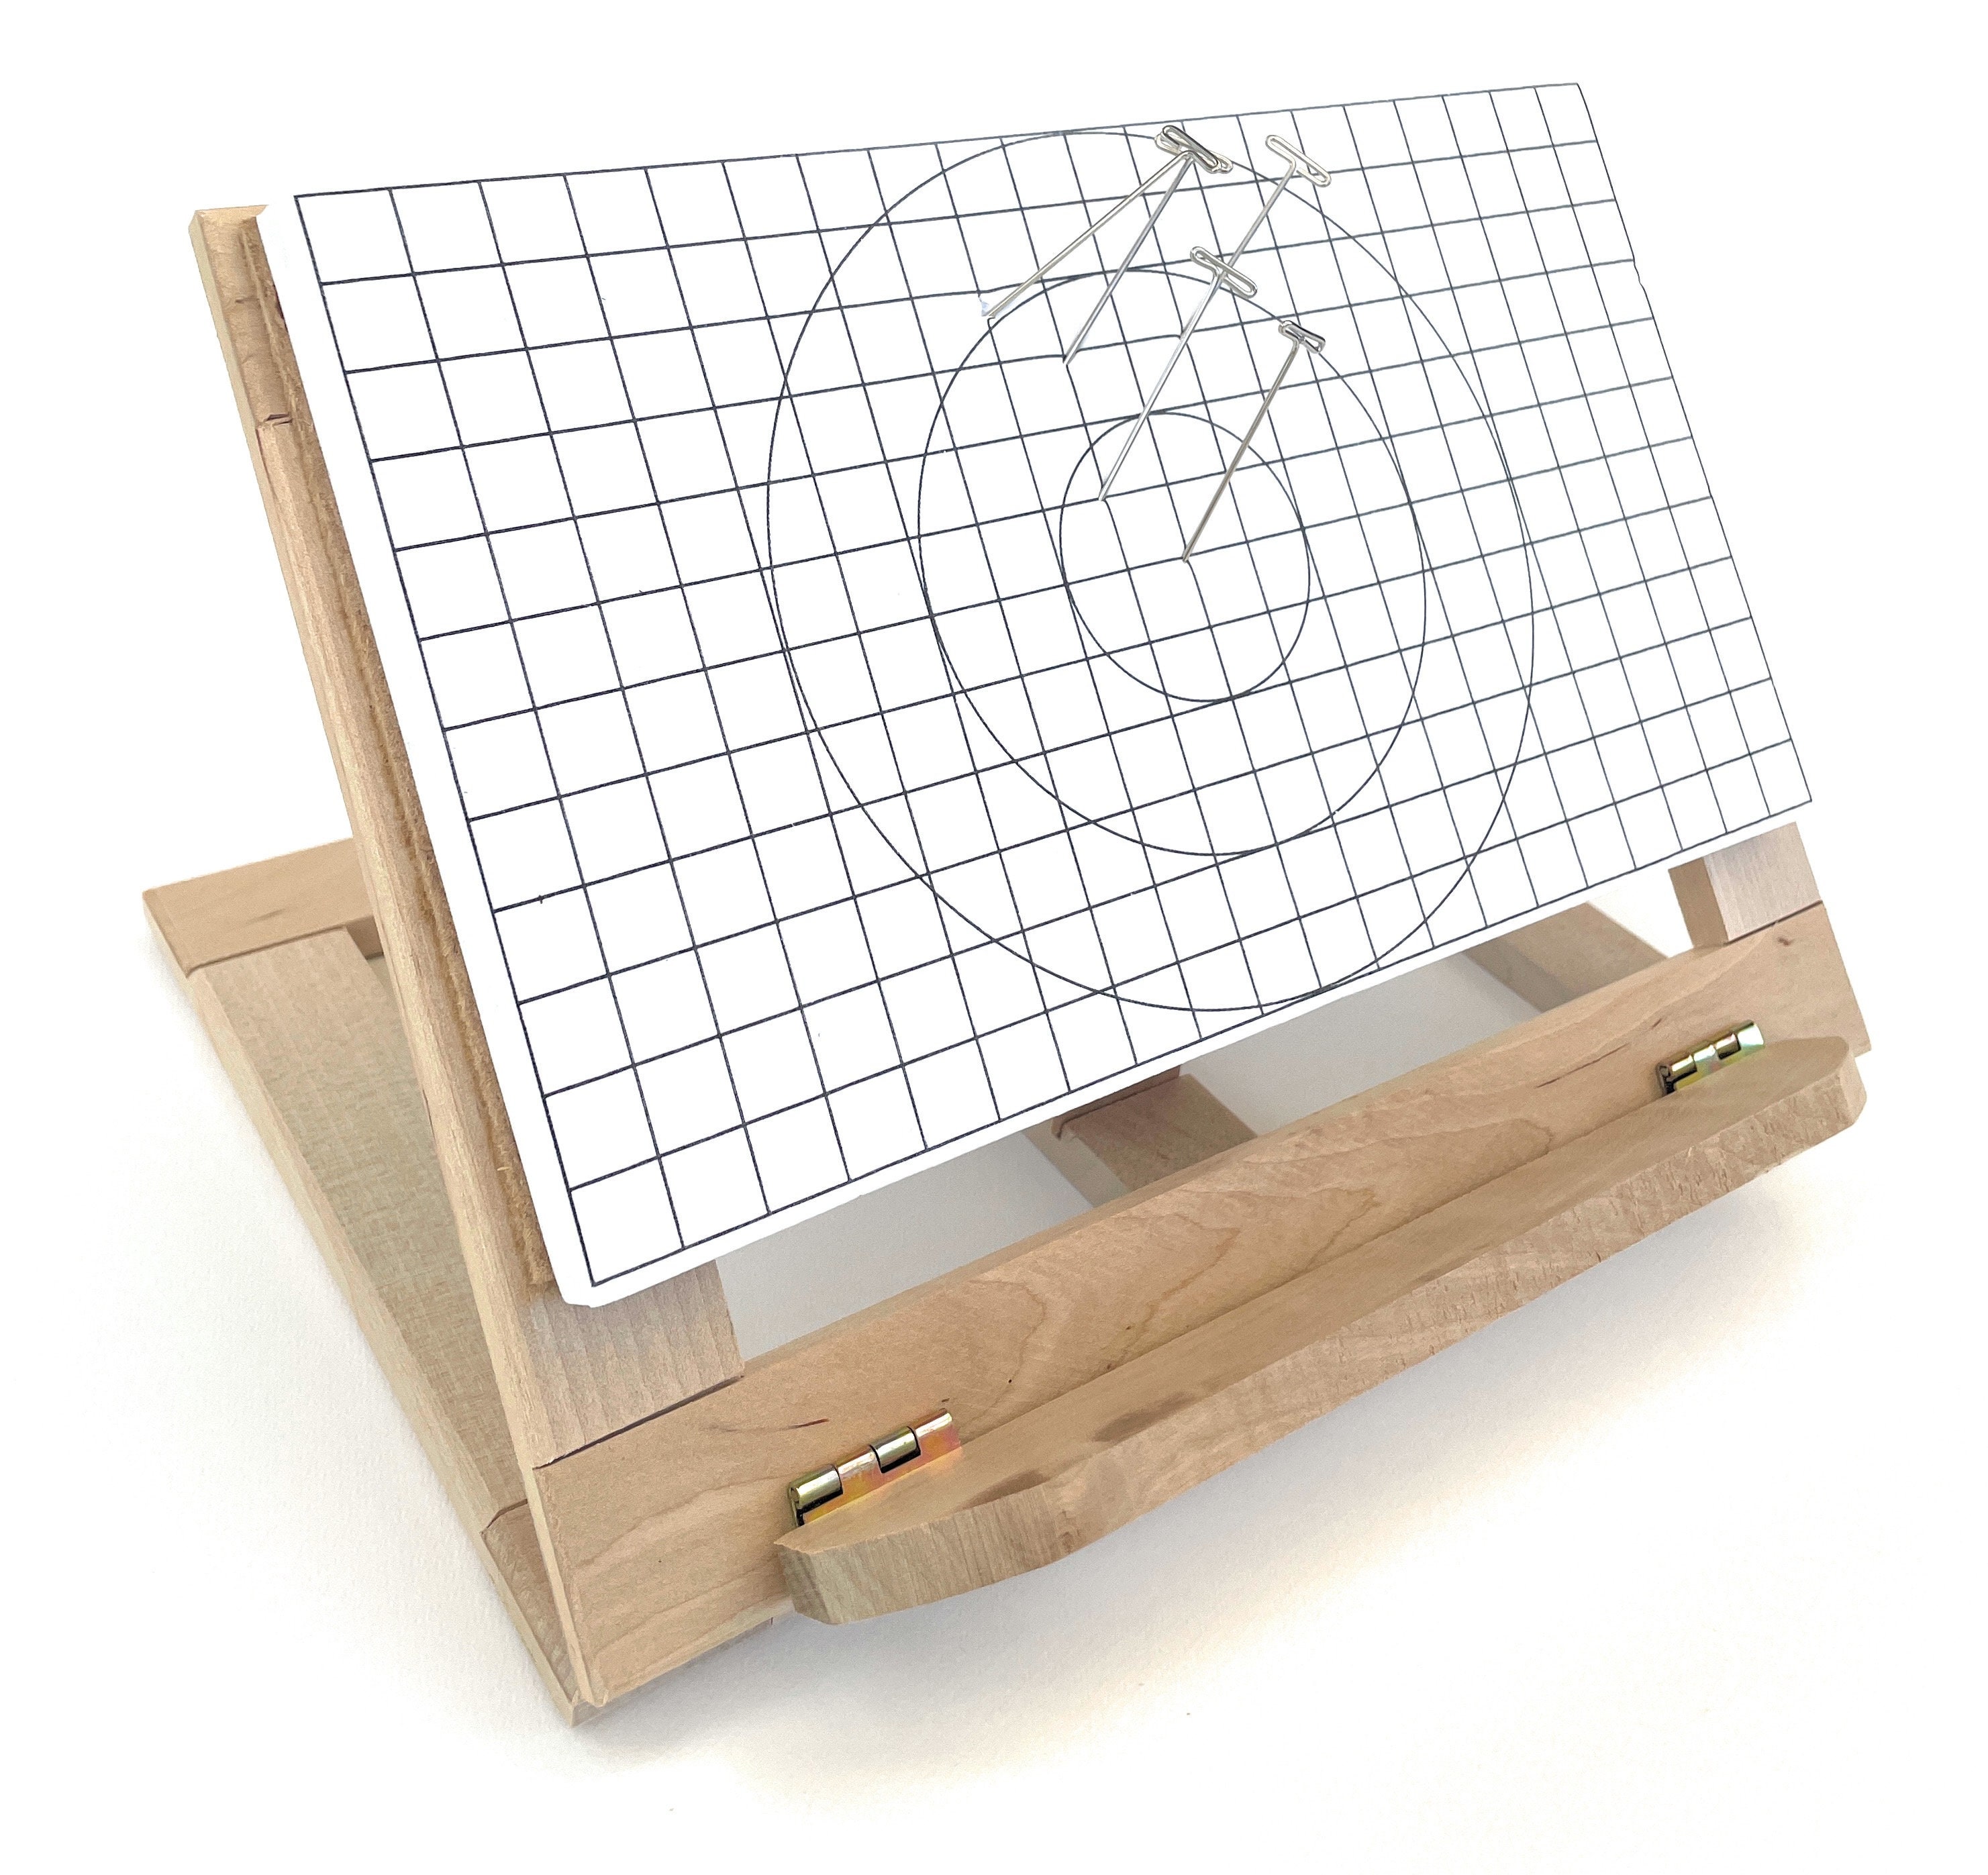 Macrame Board Portable with Grids Reusable Wooden Macrame